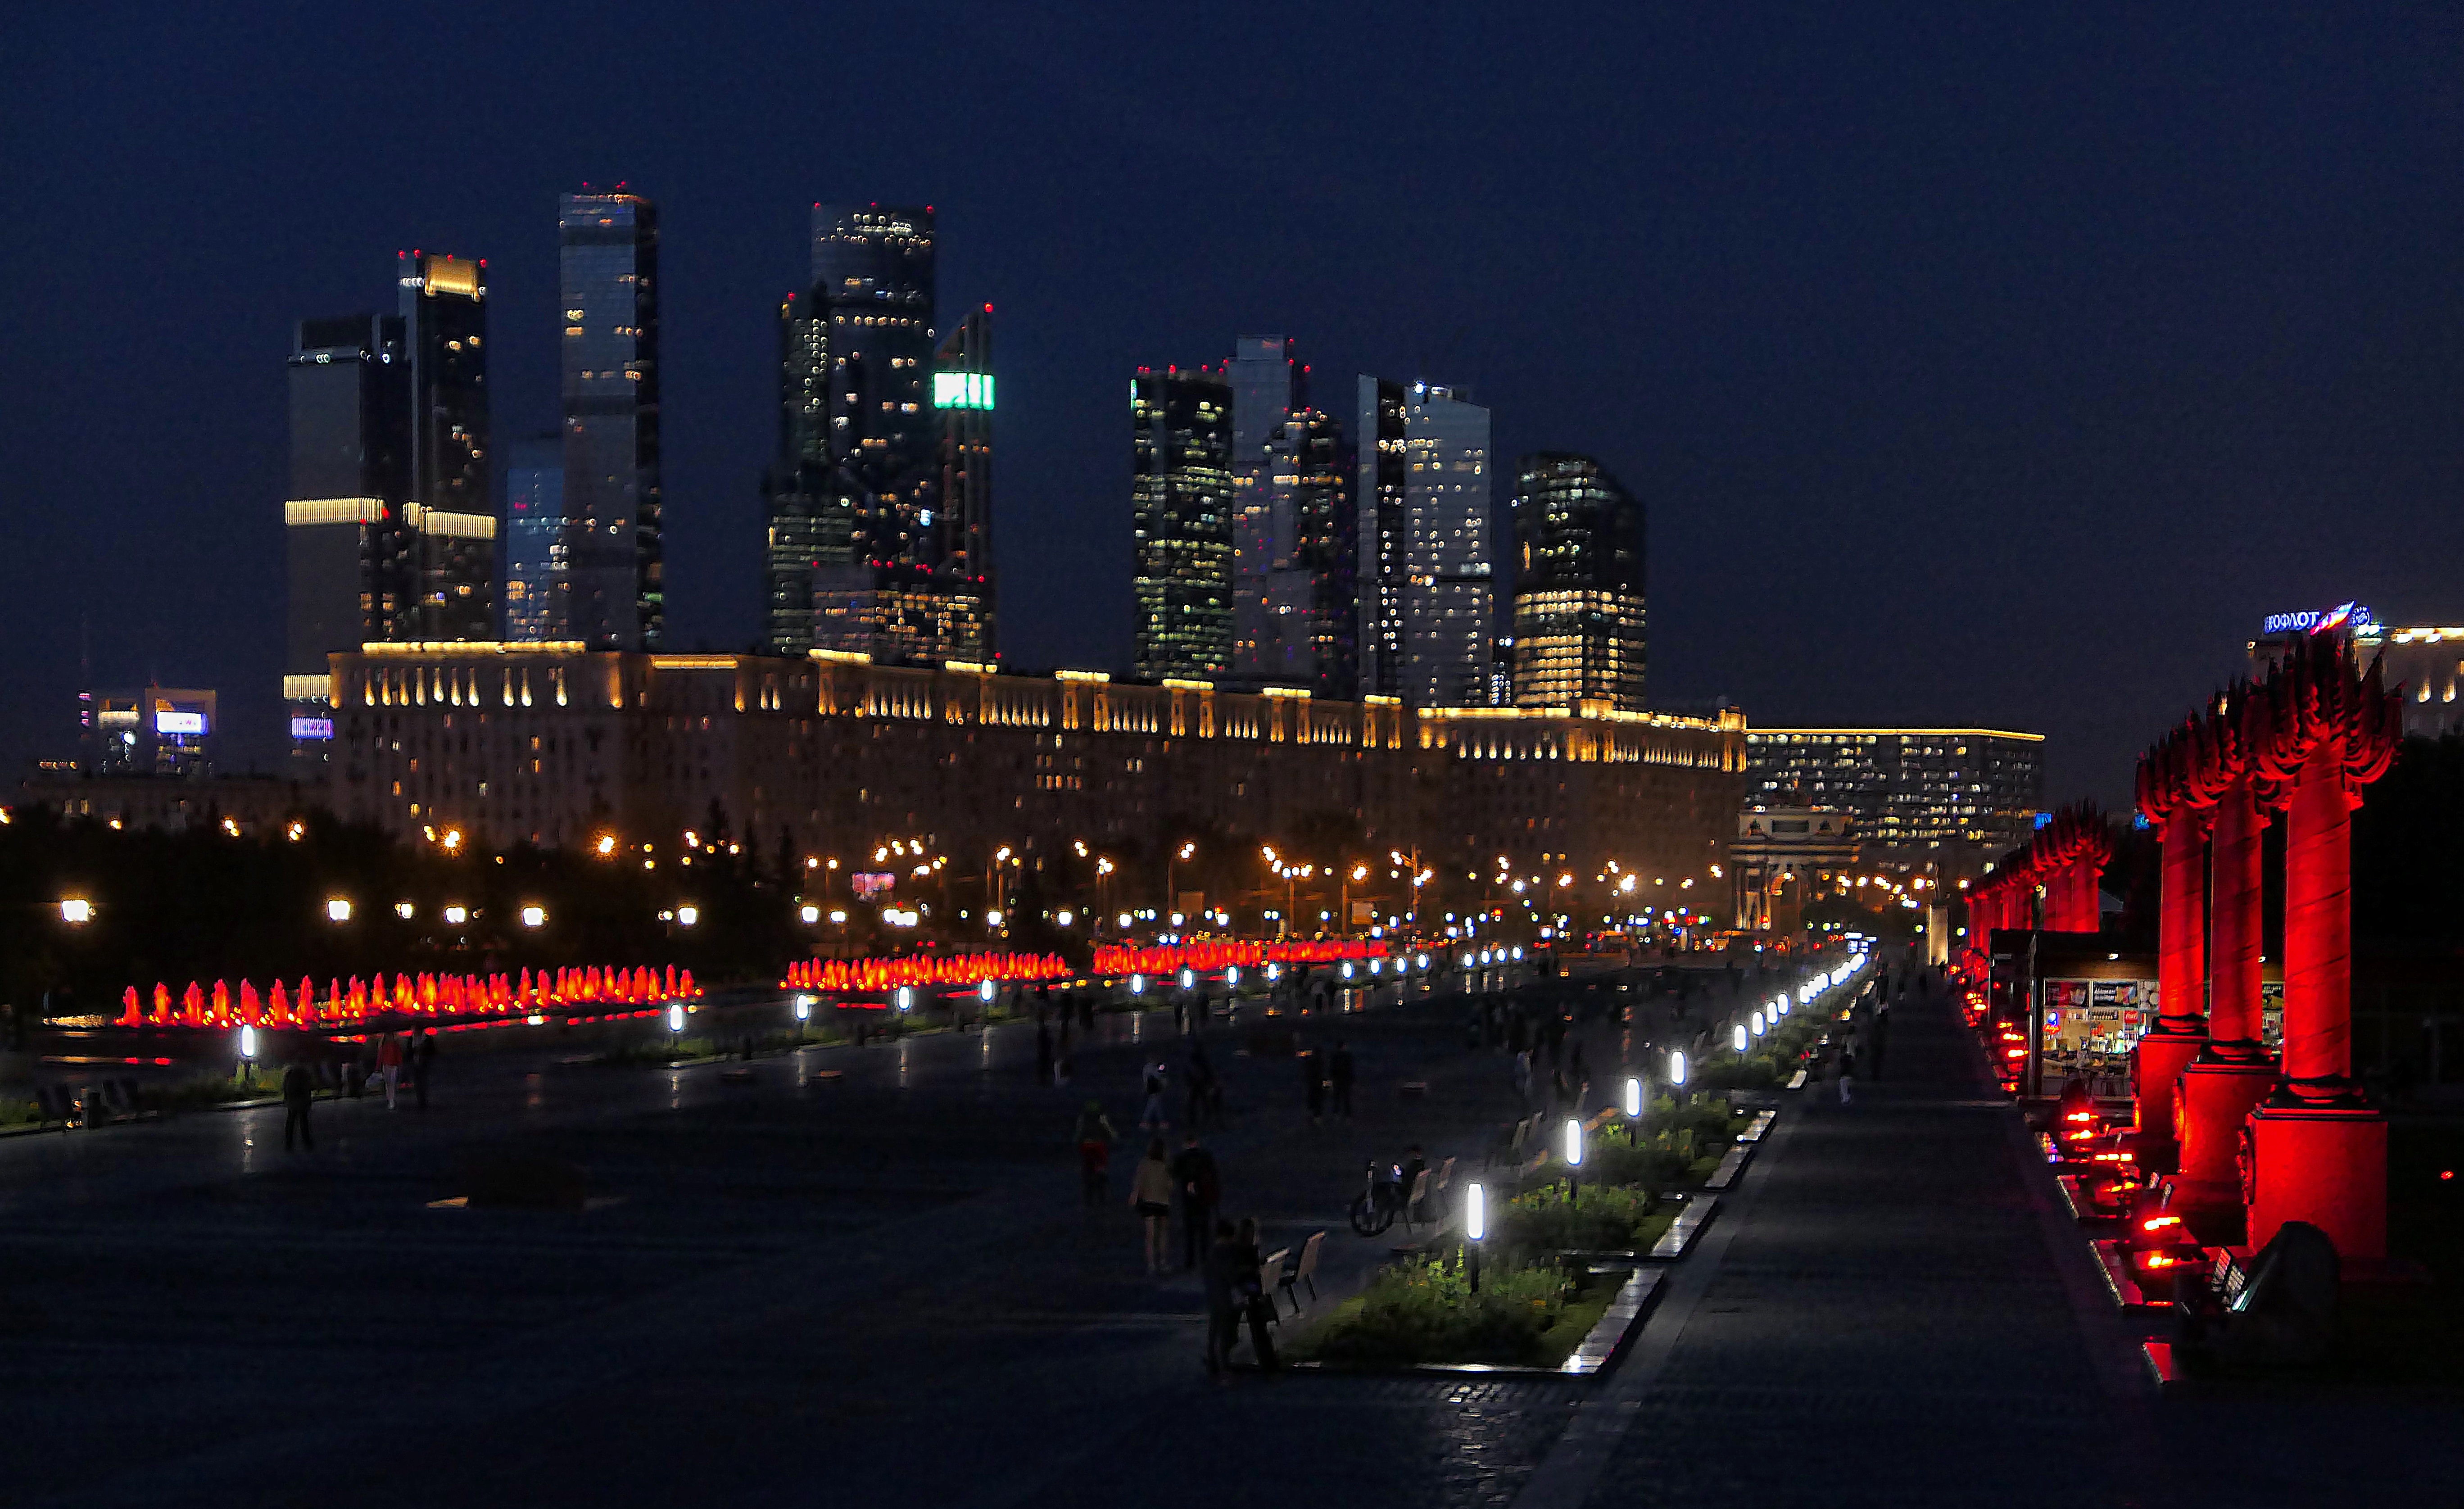 Вид на фонтаны и Москву-Сити с холма Парка Победы. Фото Морошкина В.В.